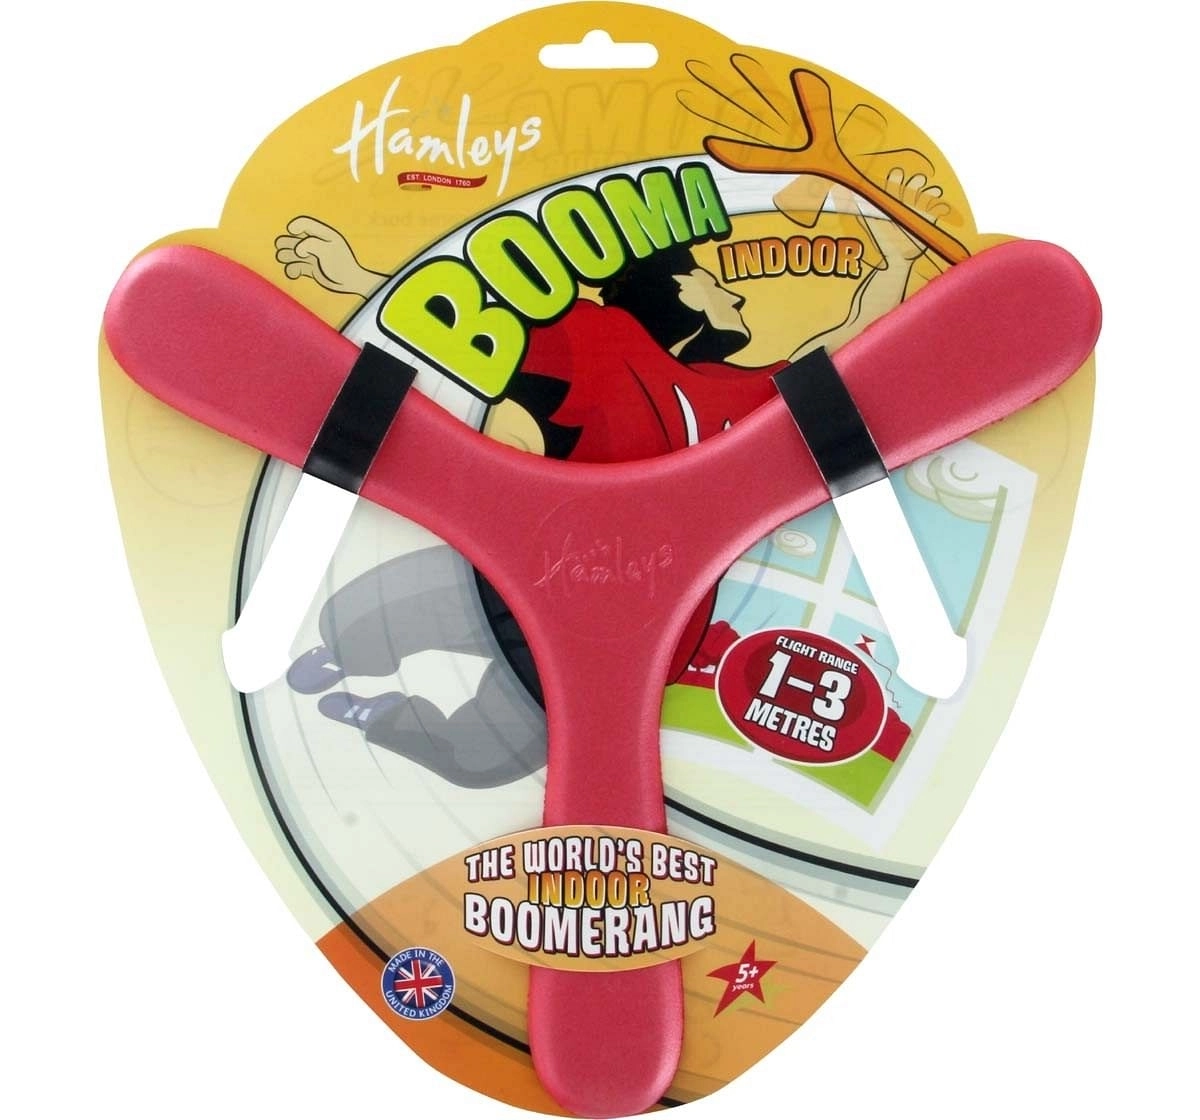 Wicked Hamleys Indoor Boomerang Impulse Toys for Kids age 5Y+ (Yellow)